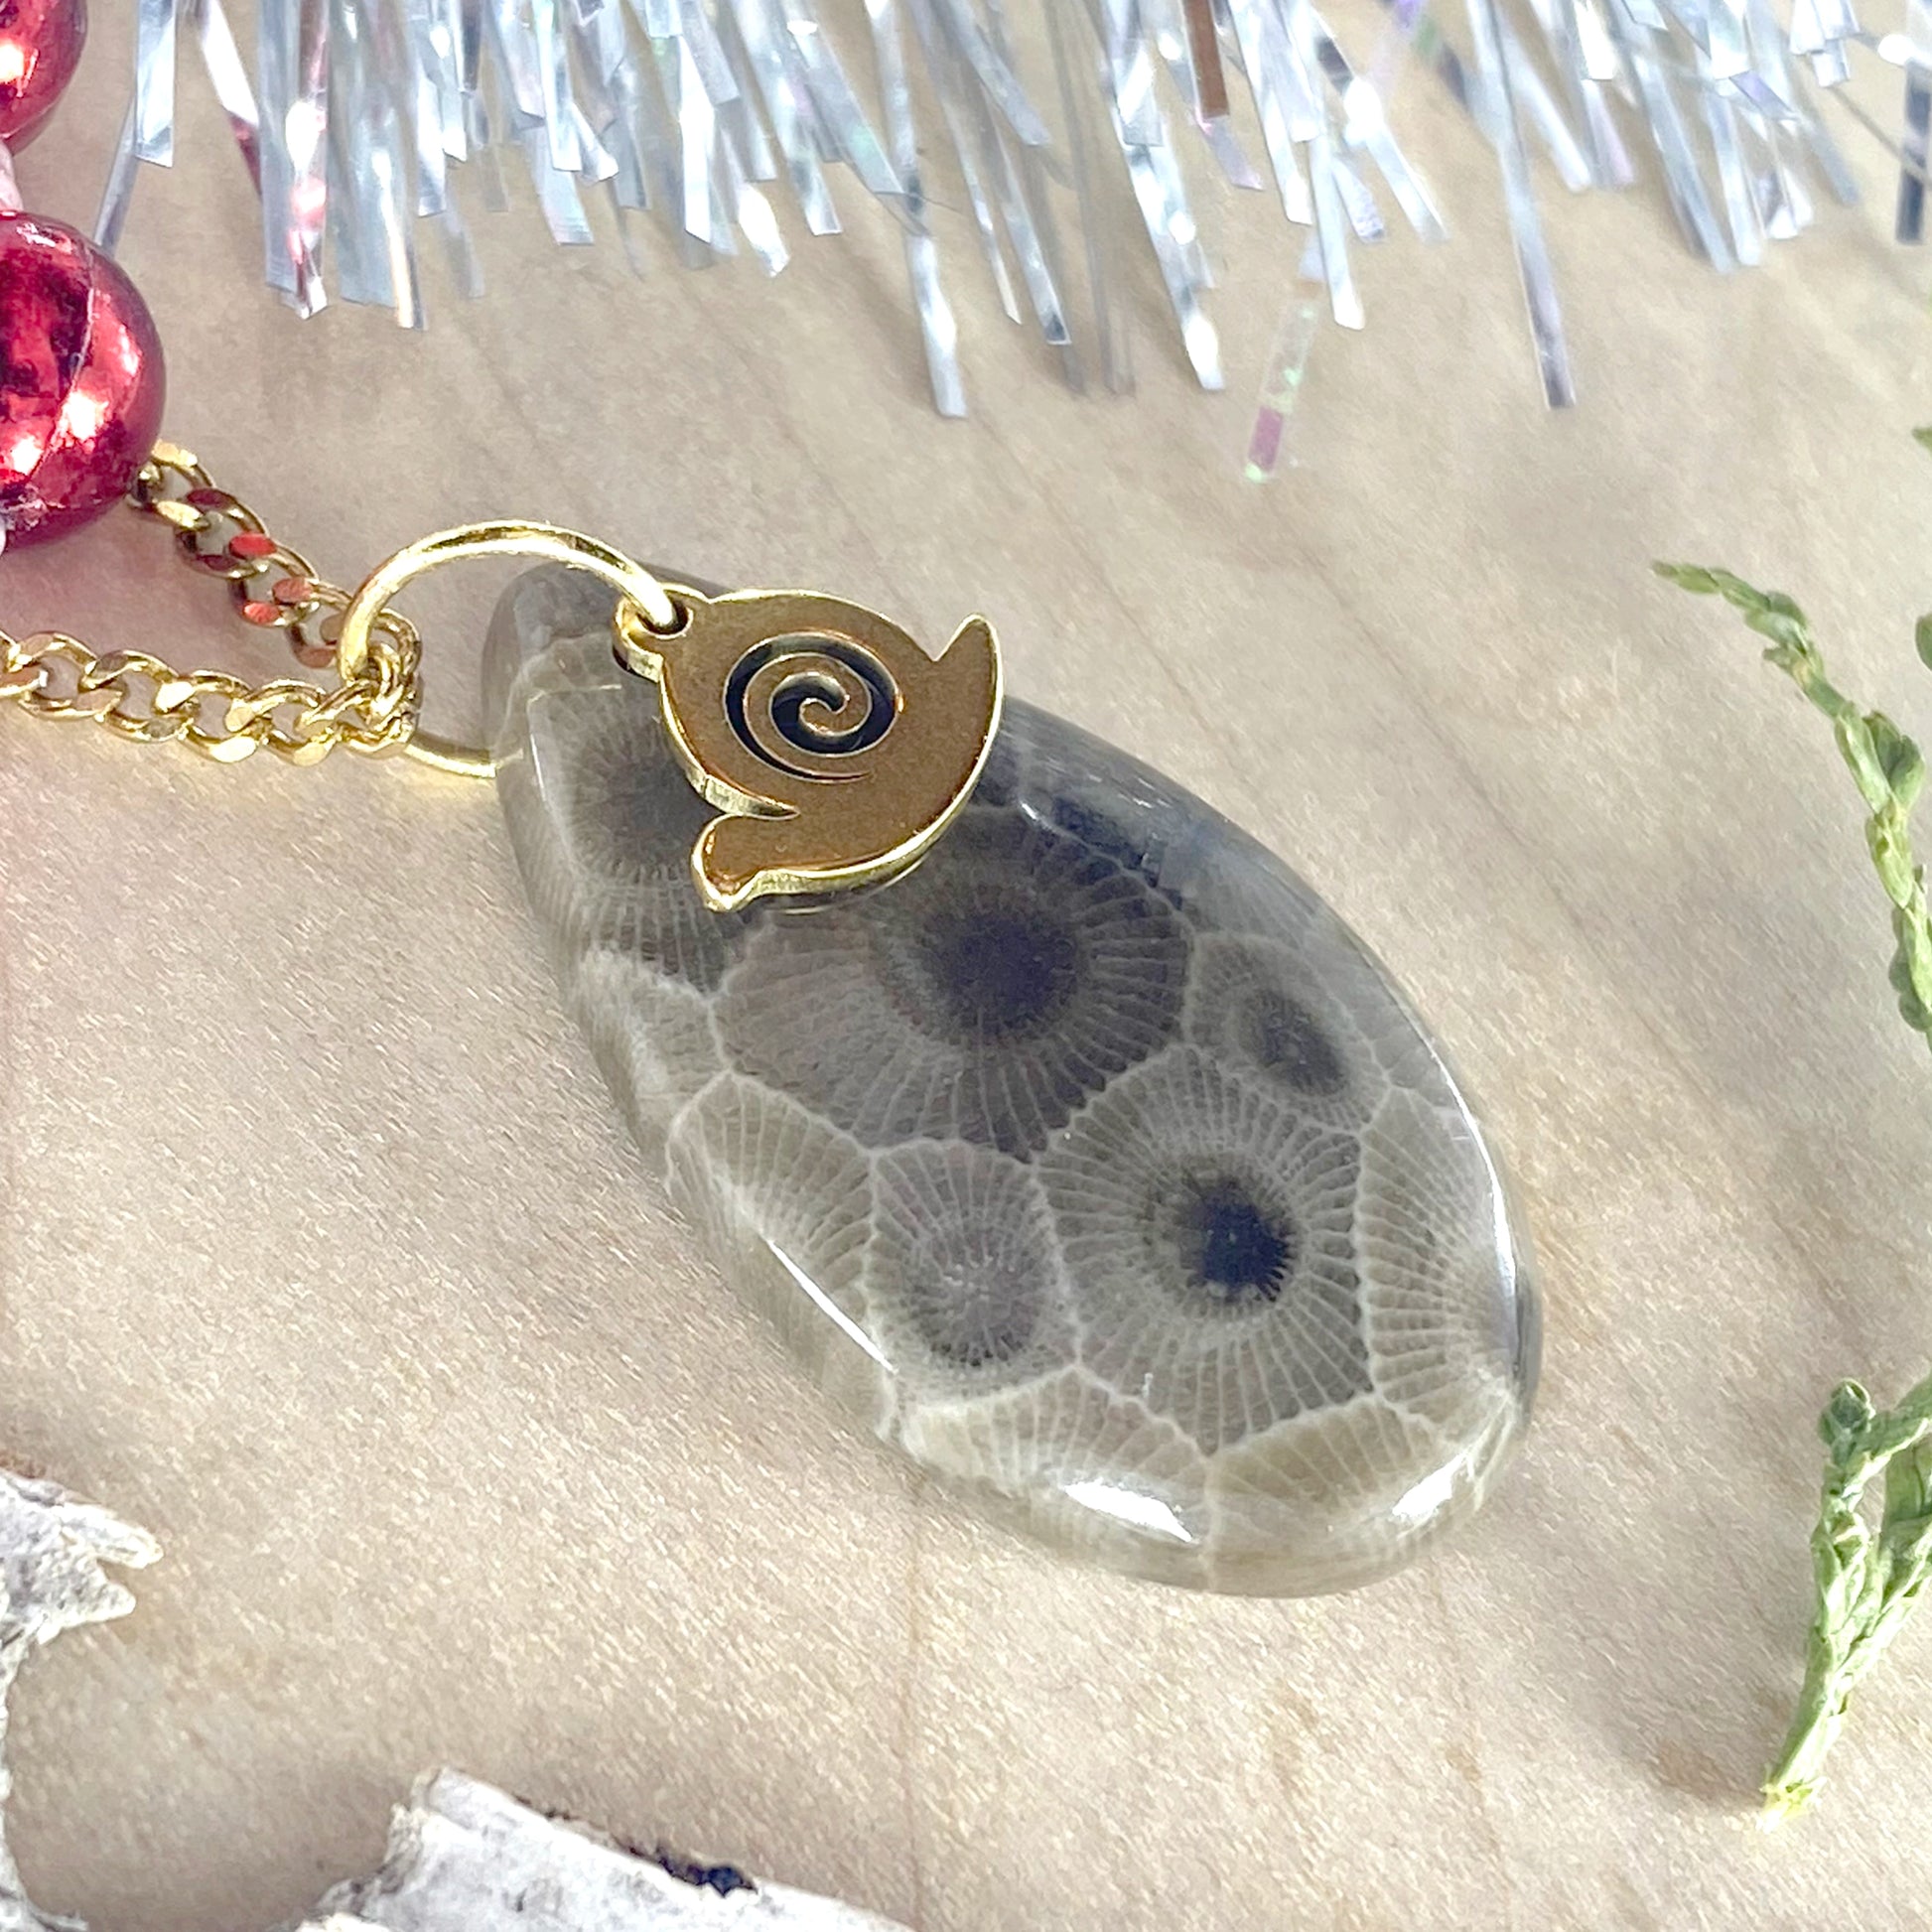 Petoskey Stone Snail Pendant Necklace - Stone Treasures by the Lake